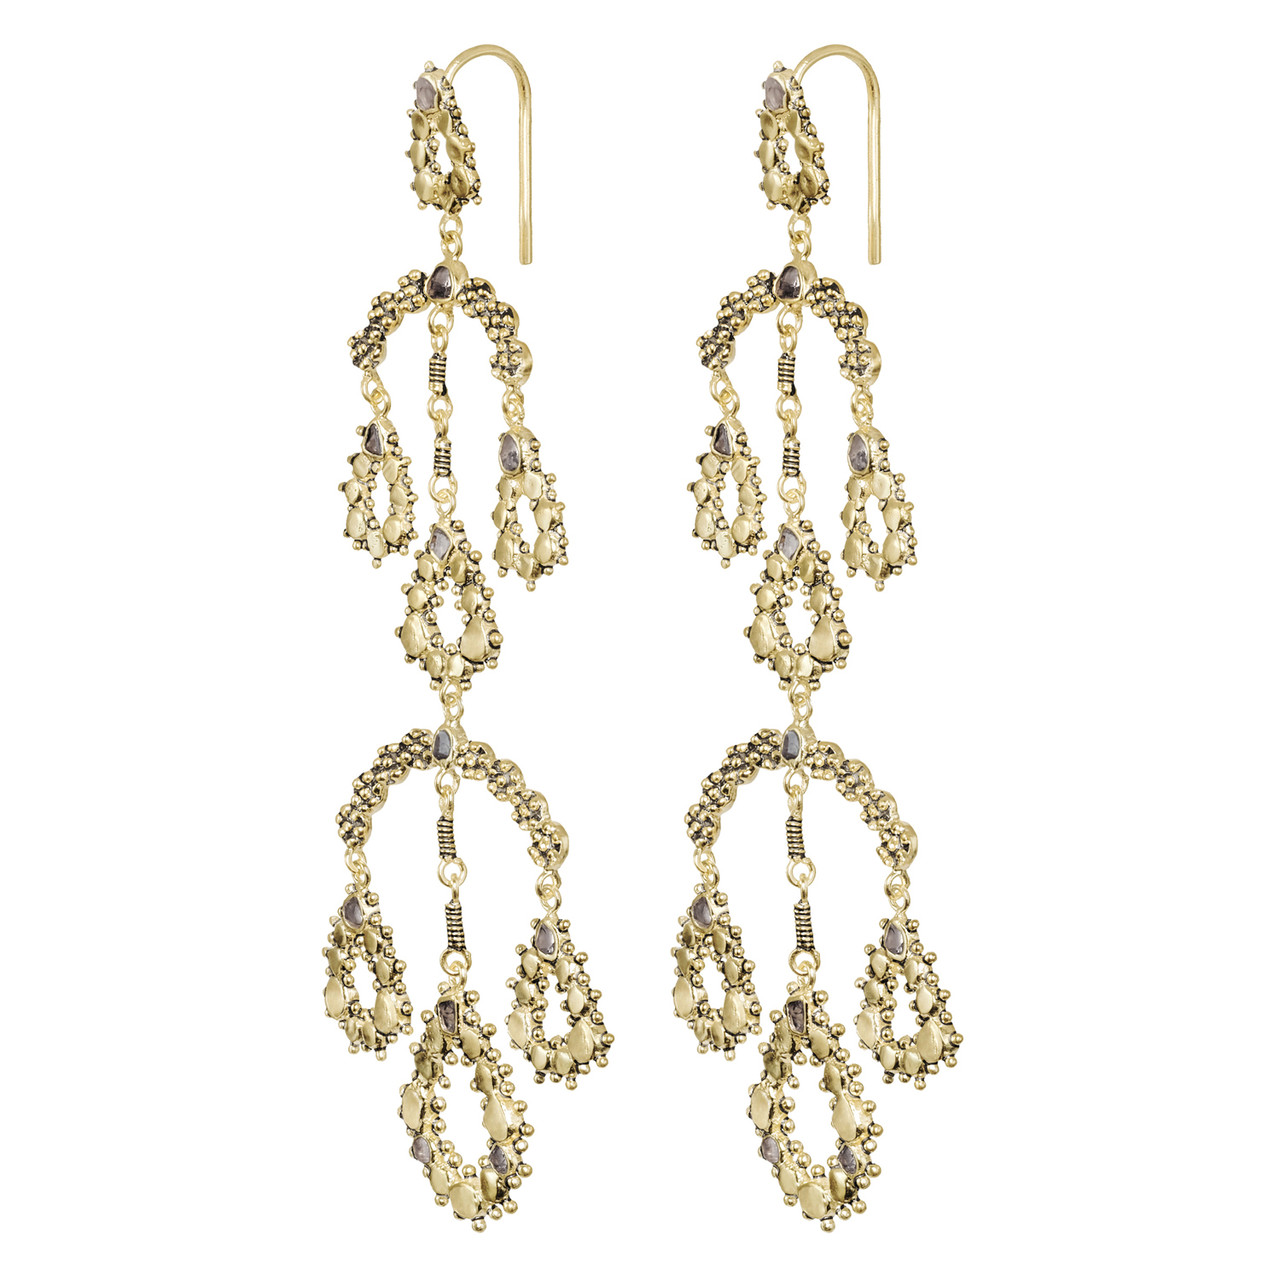 N° 850 Antique Gold Chandelier Earrings, Marie Laure Chamorel, tomfoolery